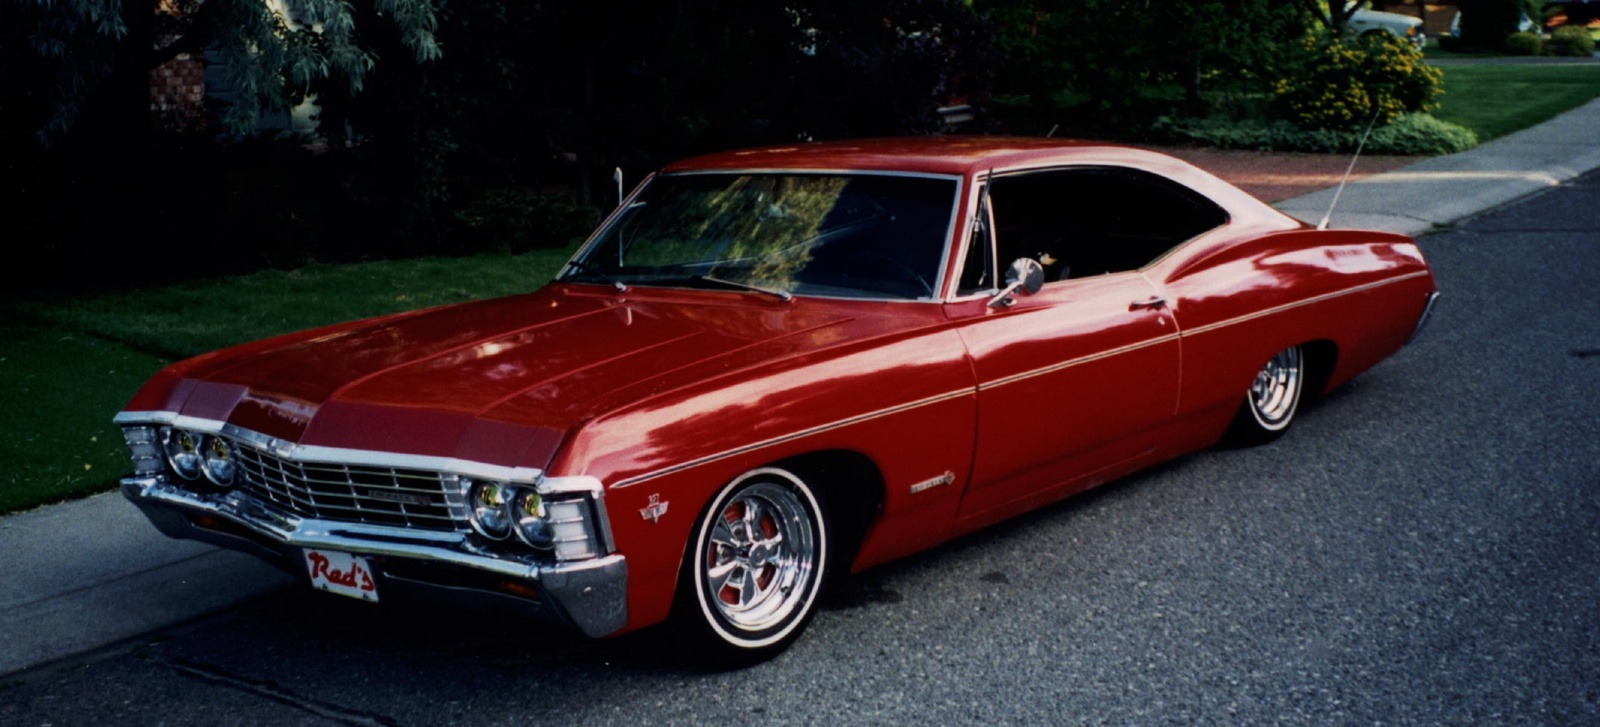 Pics For Chevy Impala Ss Wallpaper